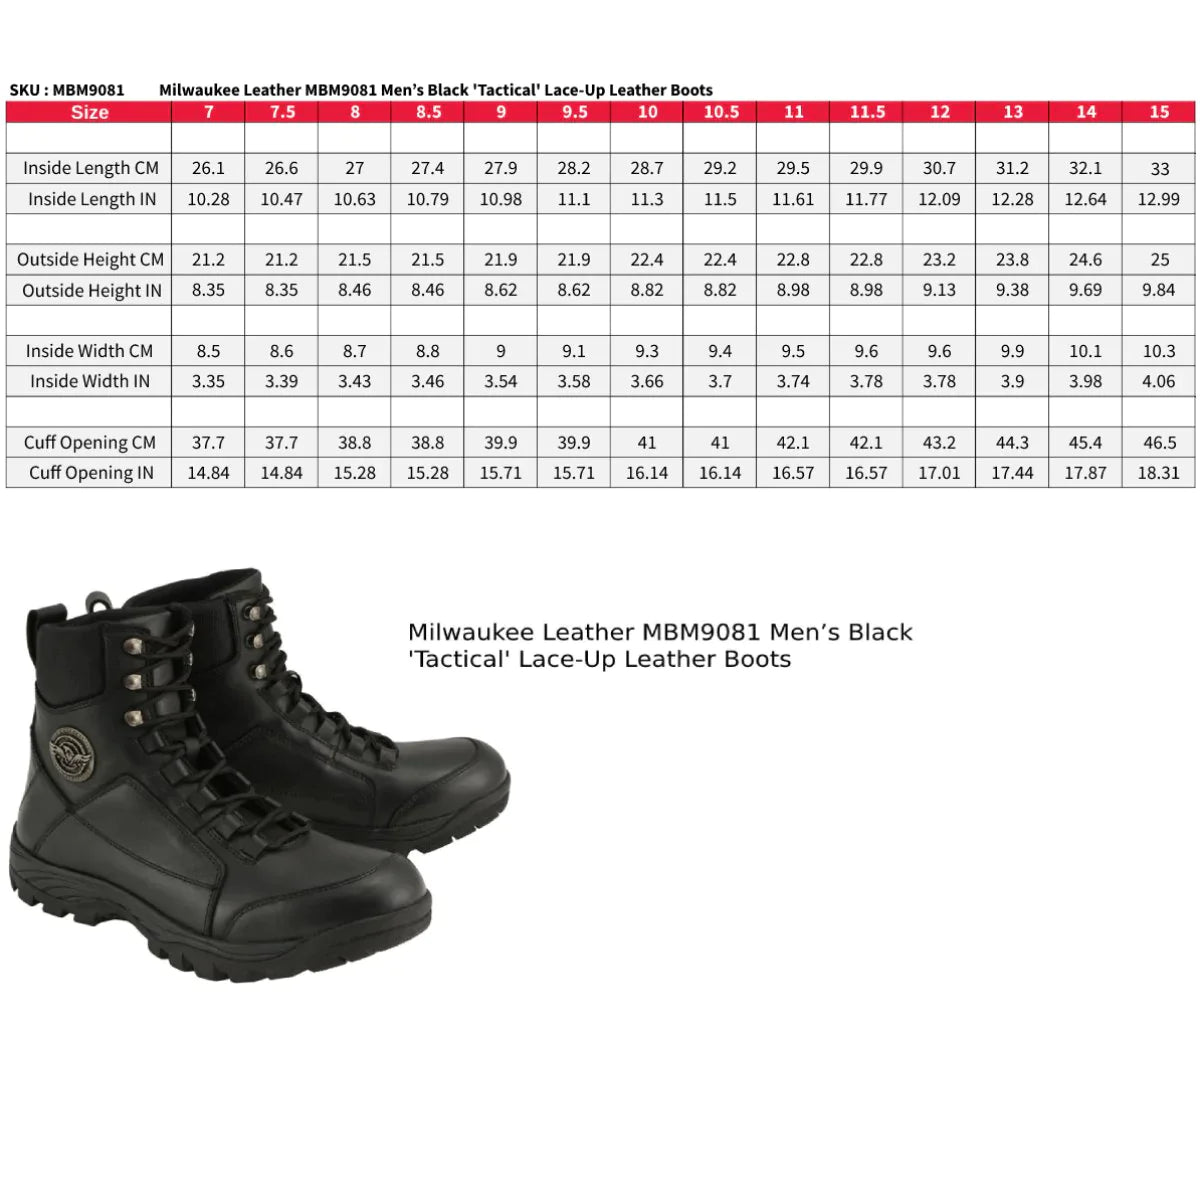 Men’s Black 'Tactical' Lace-Up Leather Boots 0 reviews